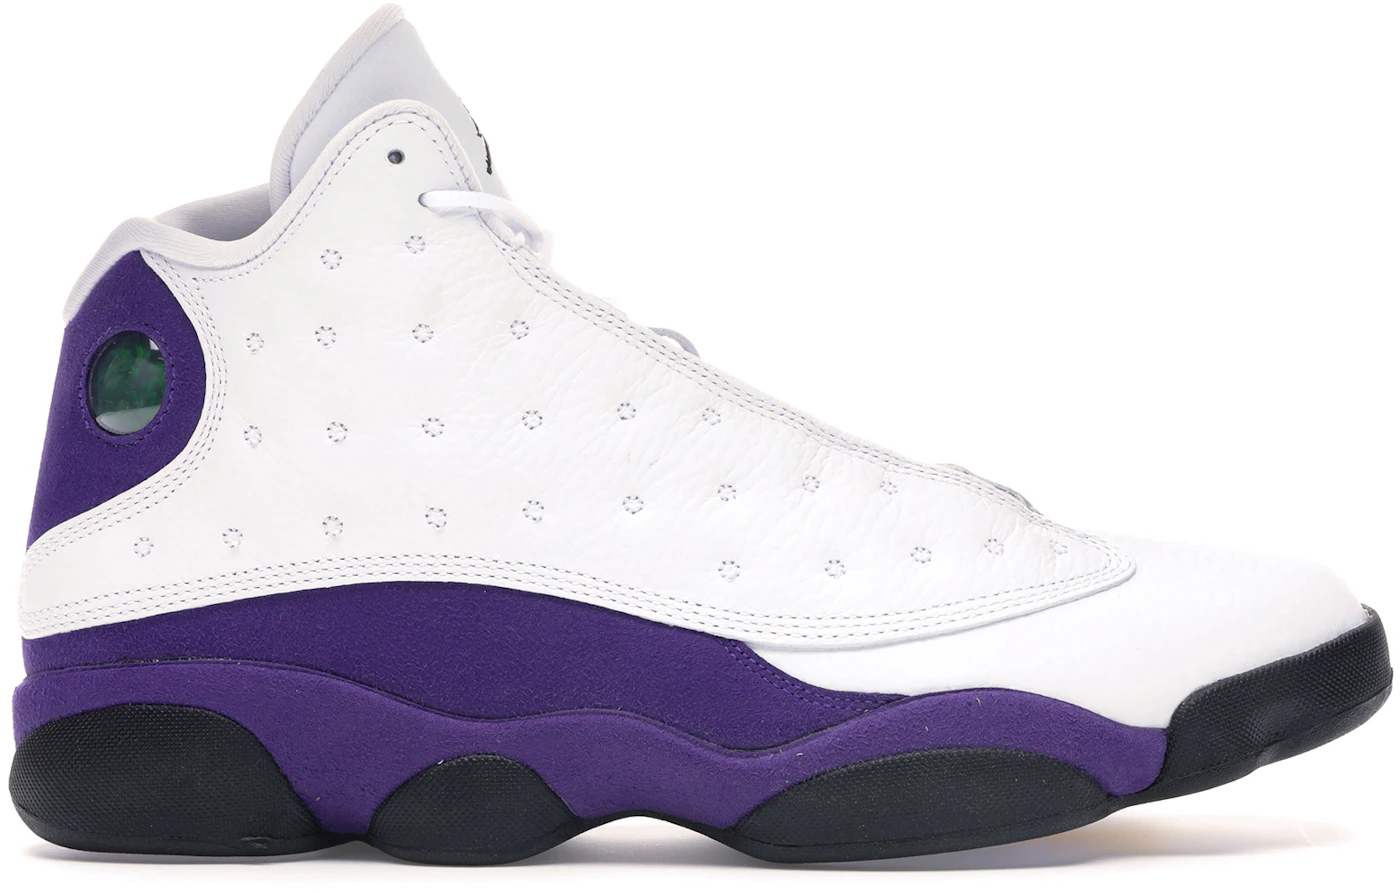 Toddler Size 7c Nike Air Jordan Retro 13 Shoes White Purple Lakers  414581-105